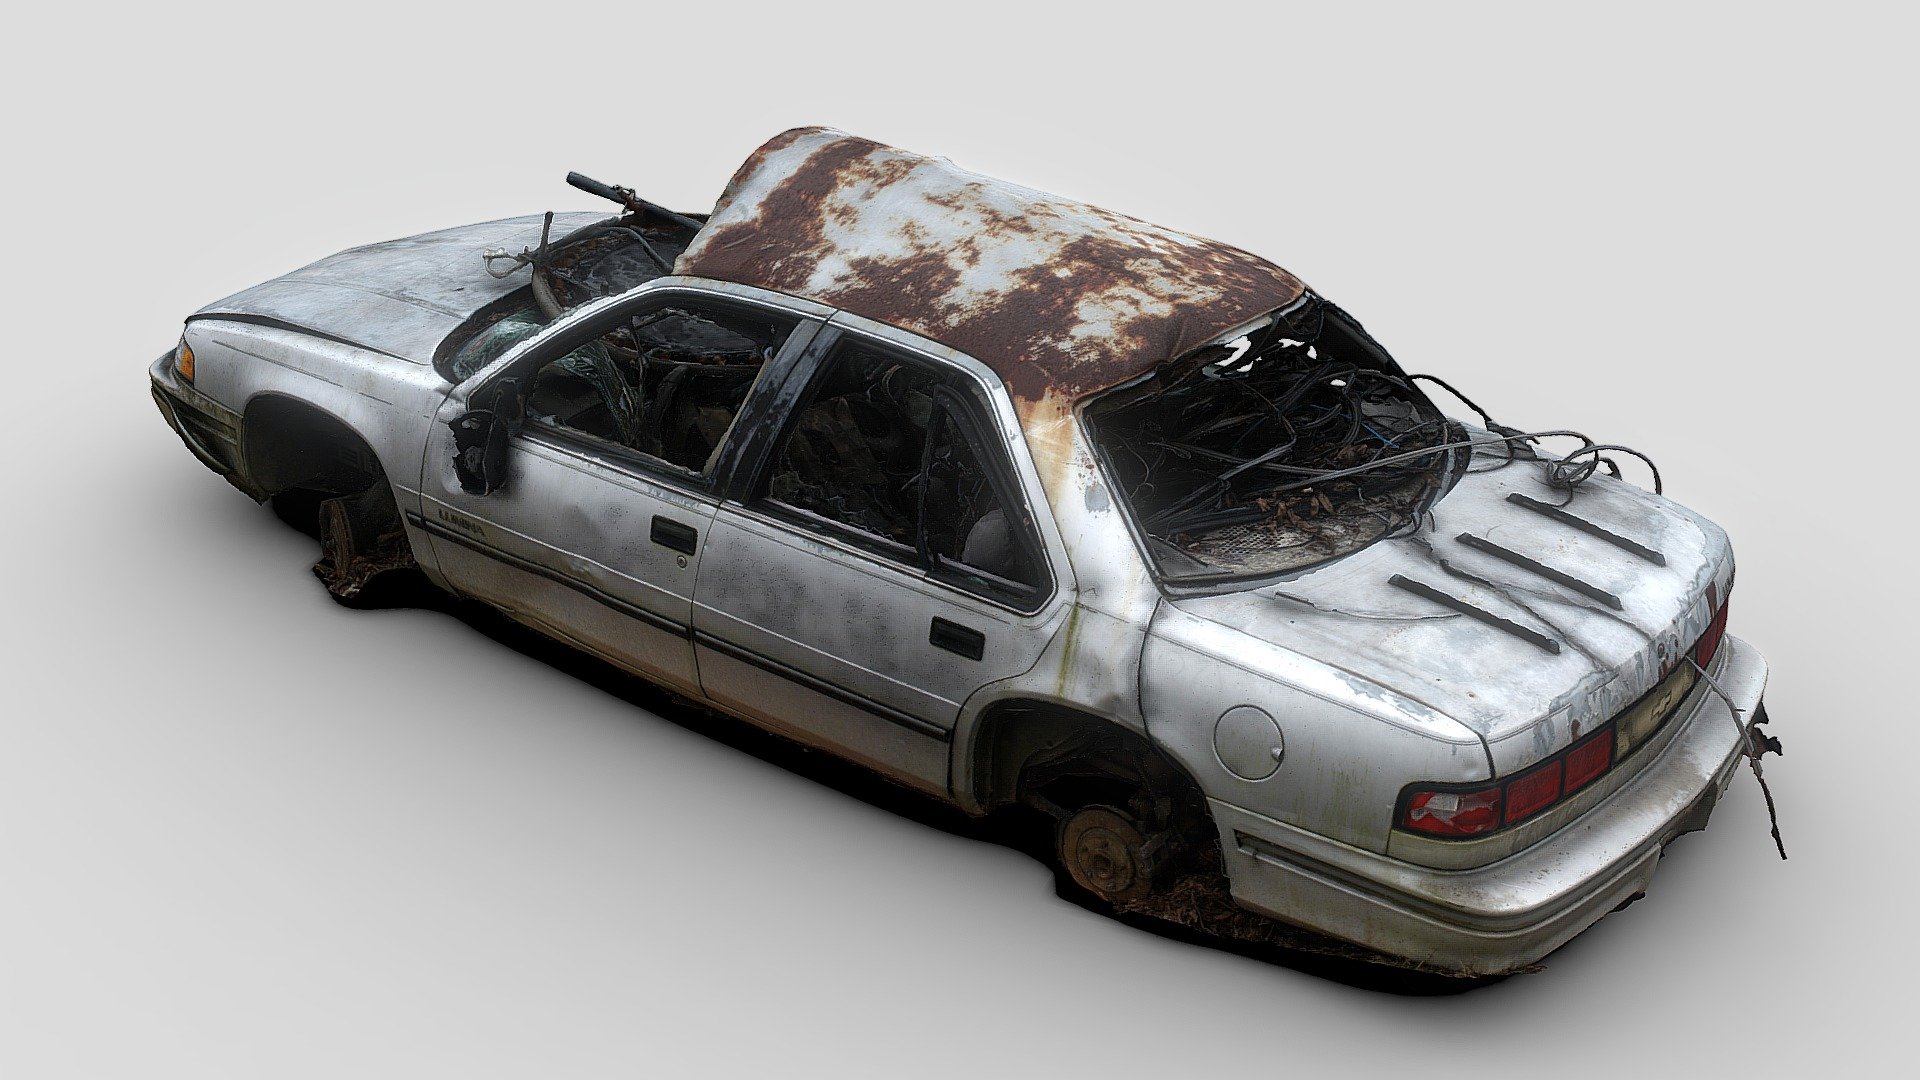 Scrap Barricade Car (Free Raw Scan) - Download Free 3D ...